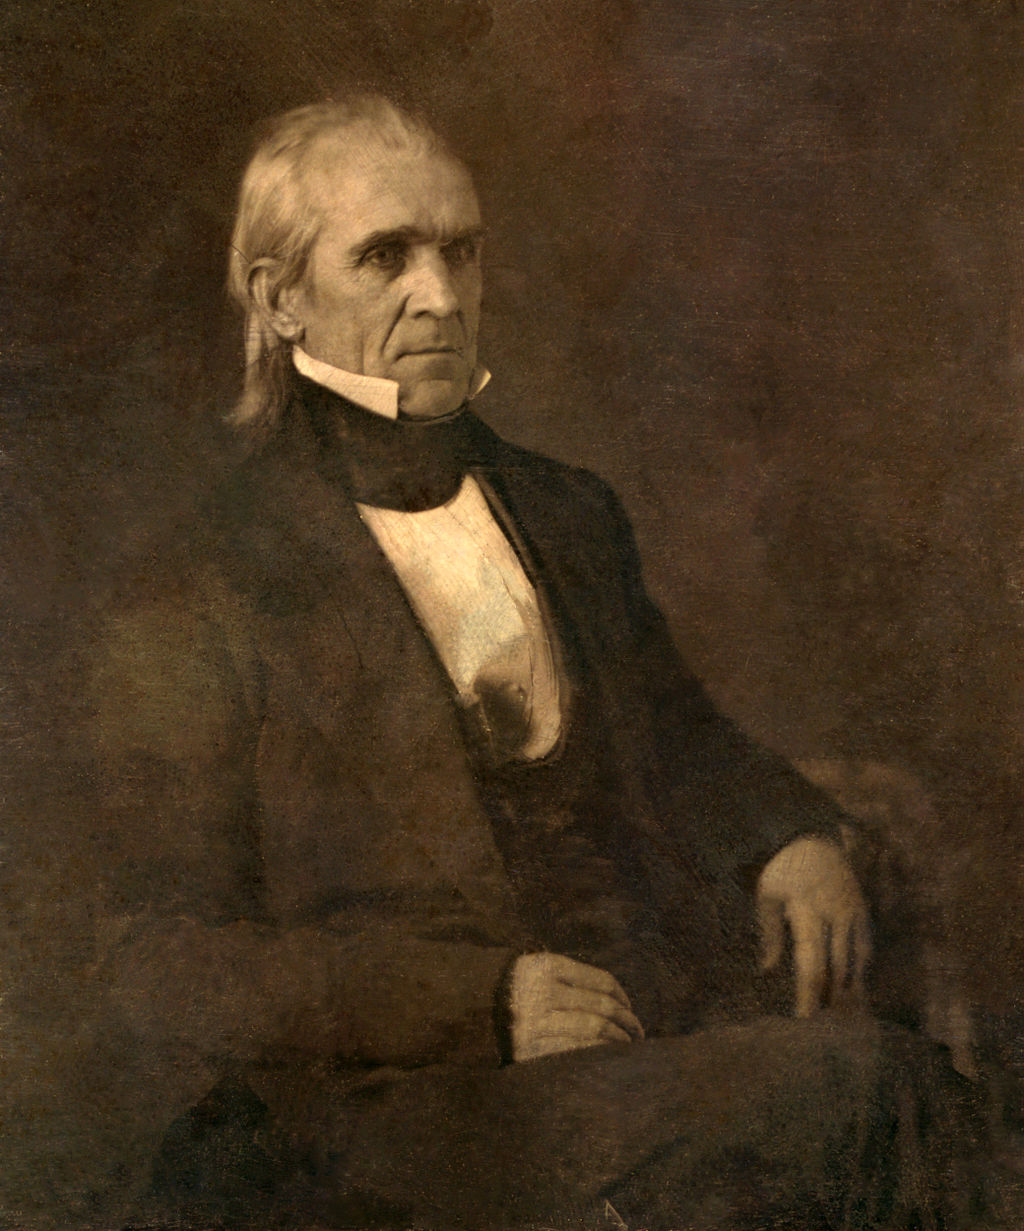 a portrait of President James Polk